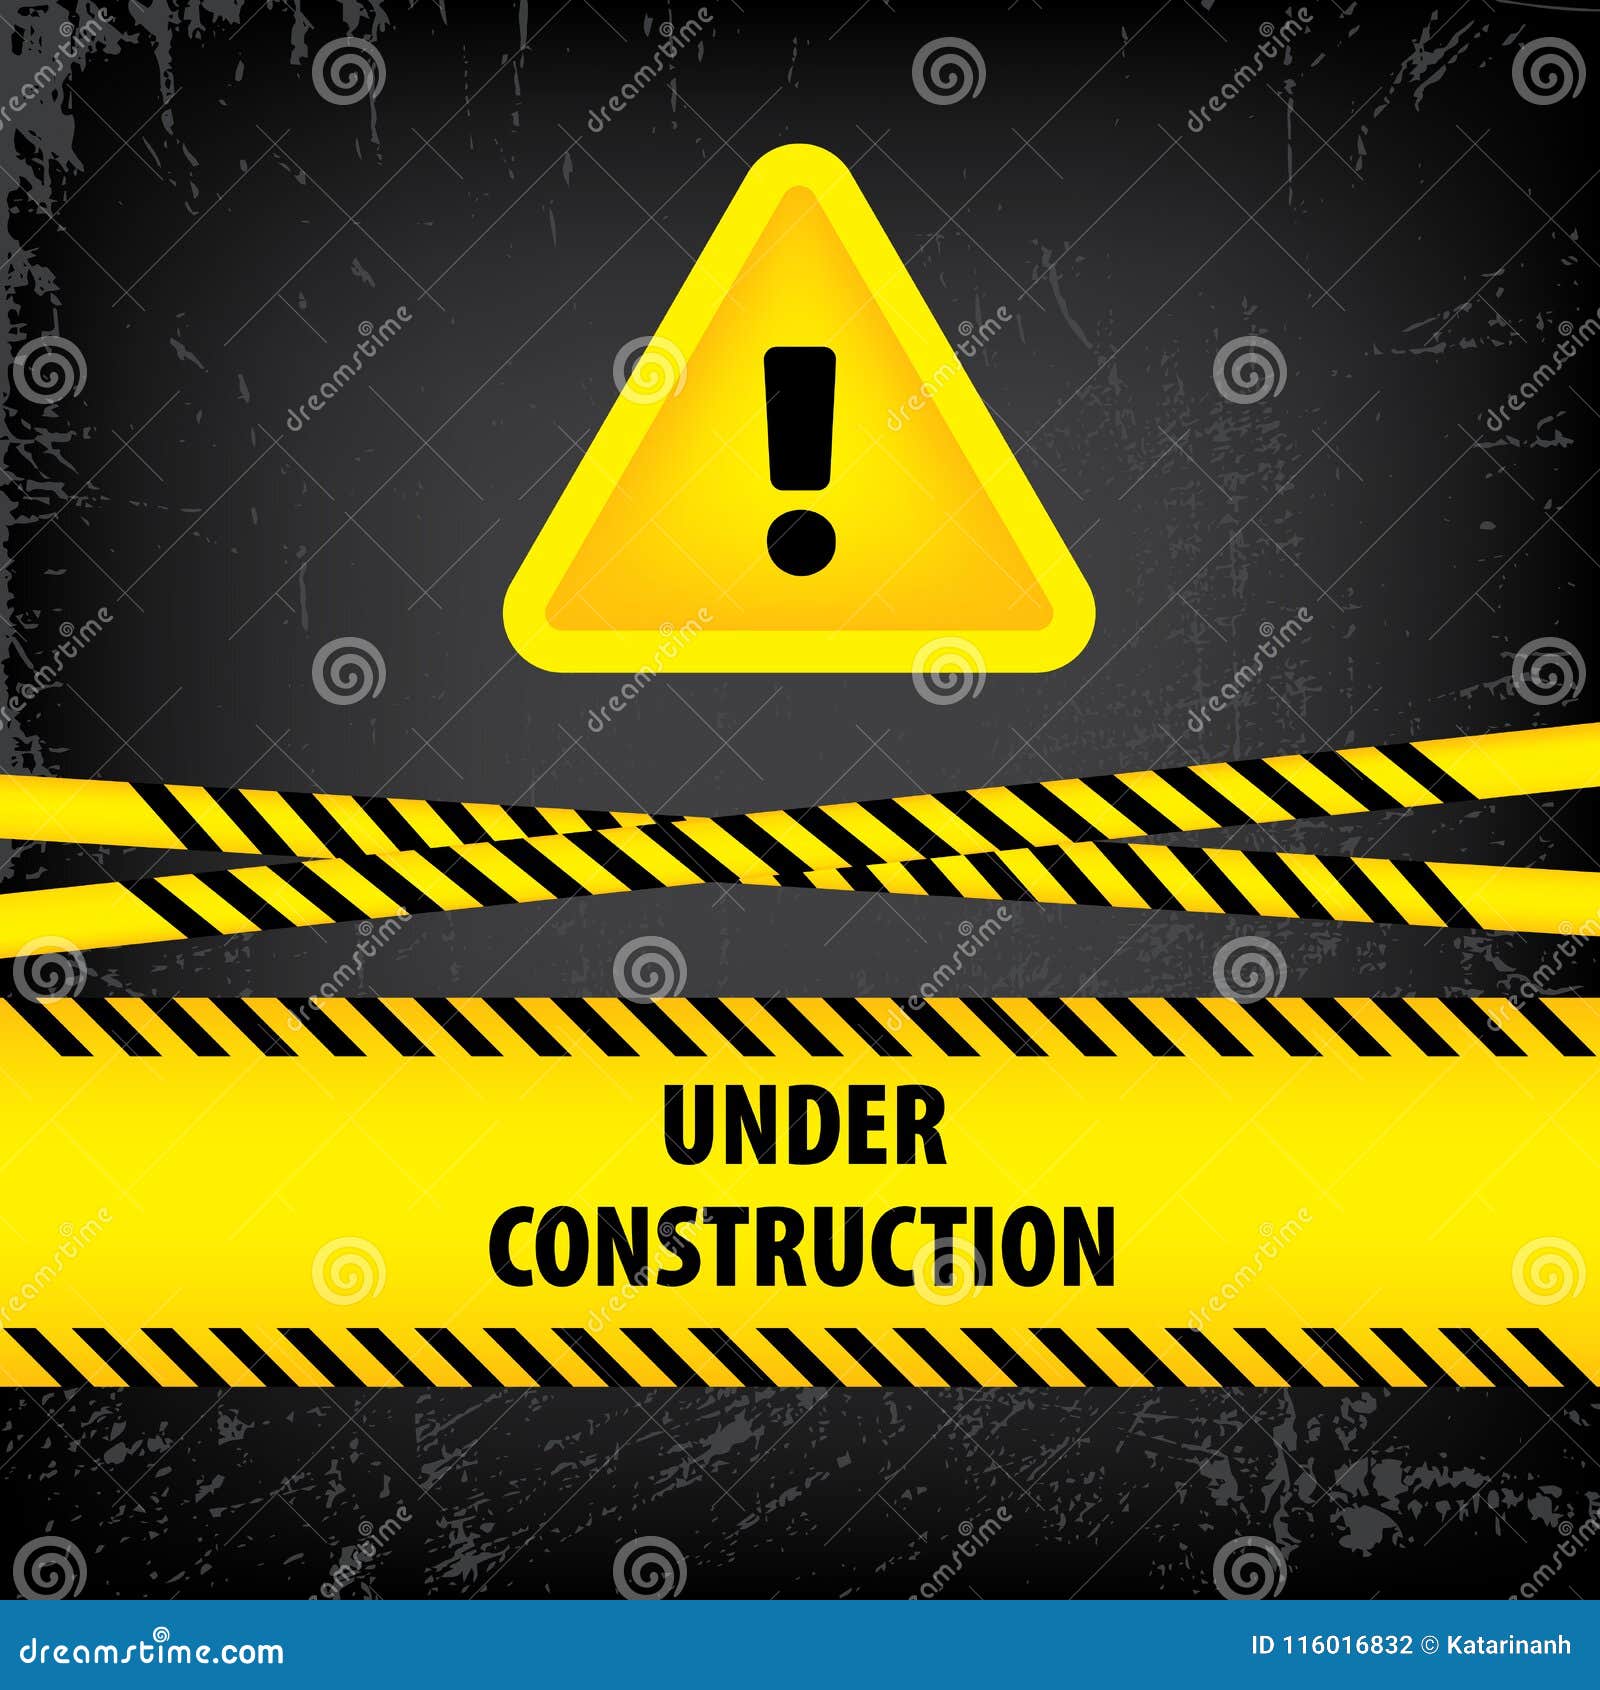 Under Construction Sign on Black Ground Background. Vector Illustration ...